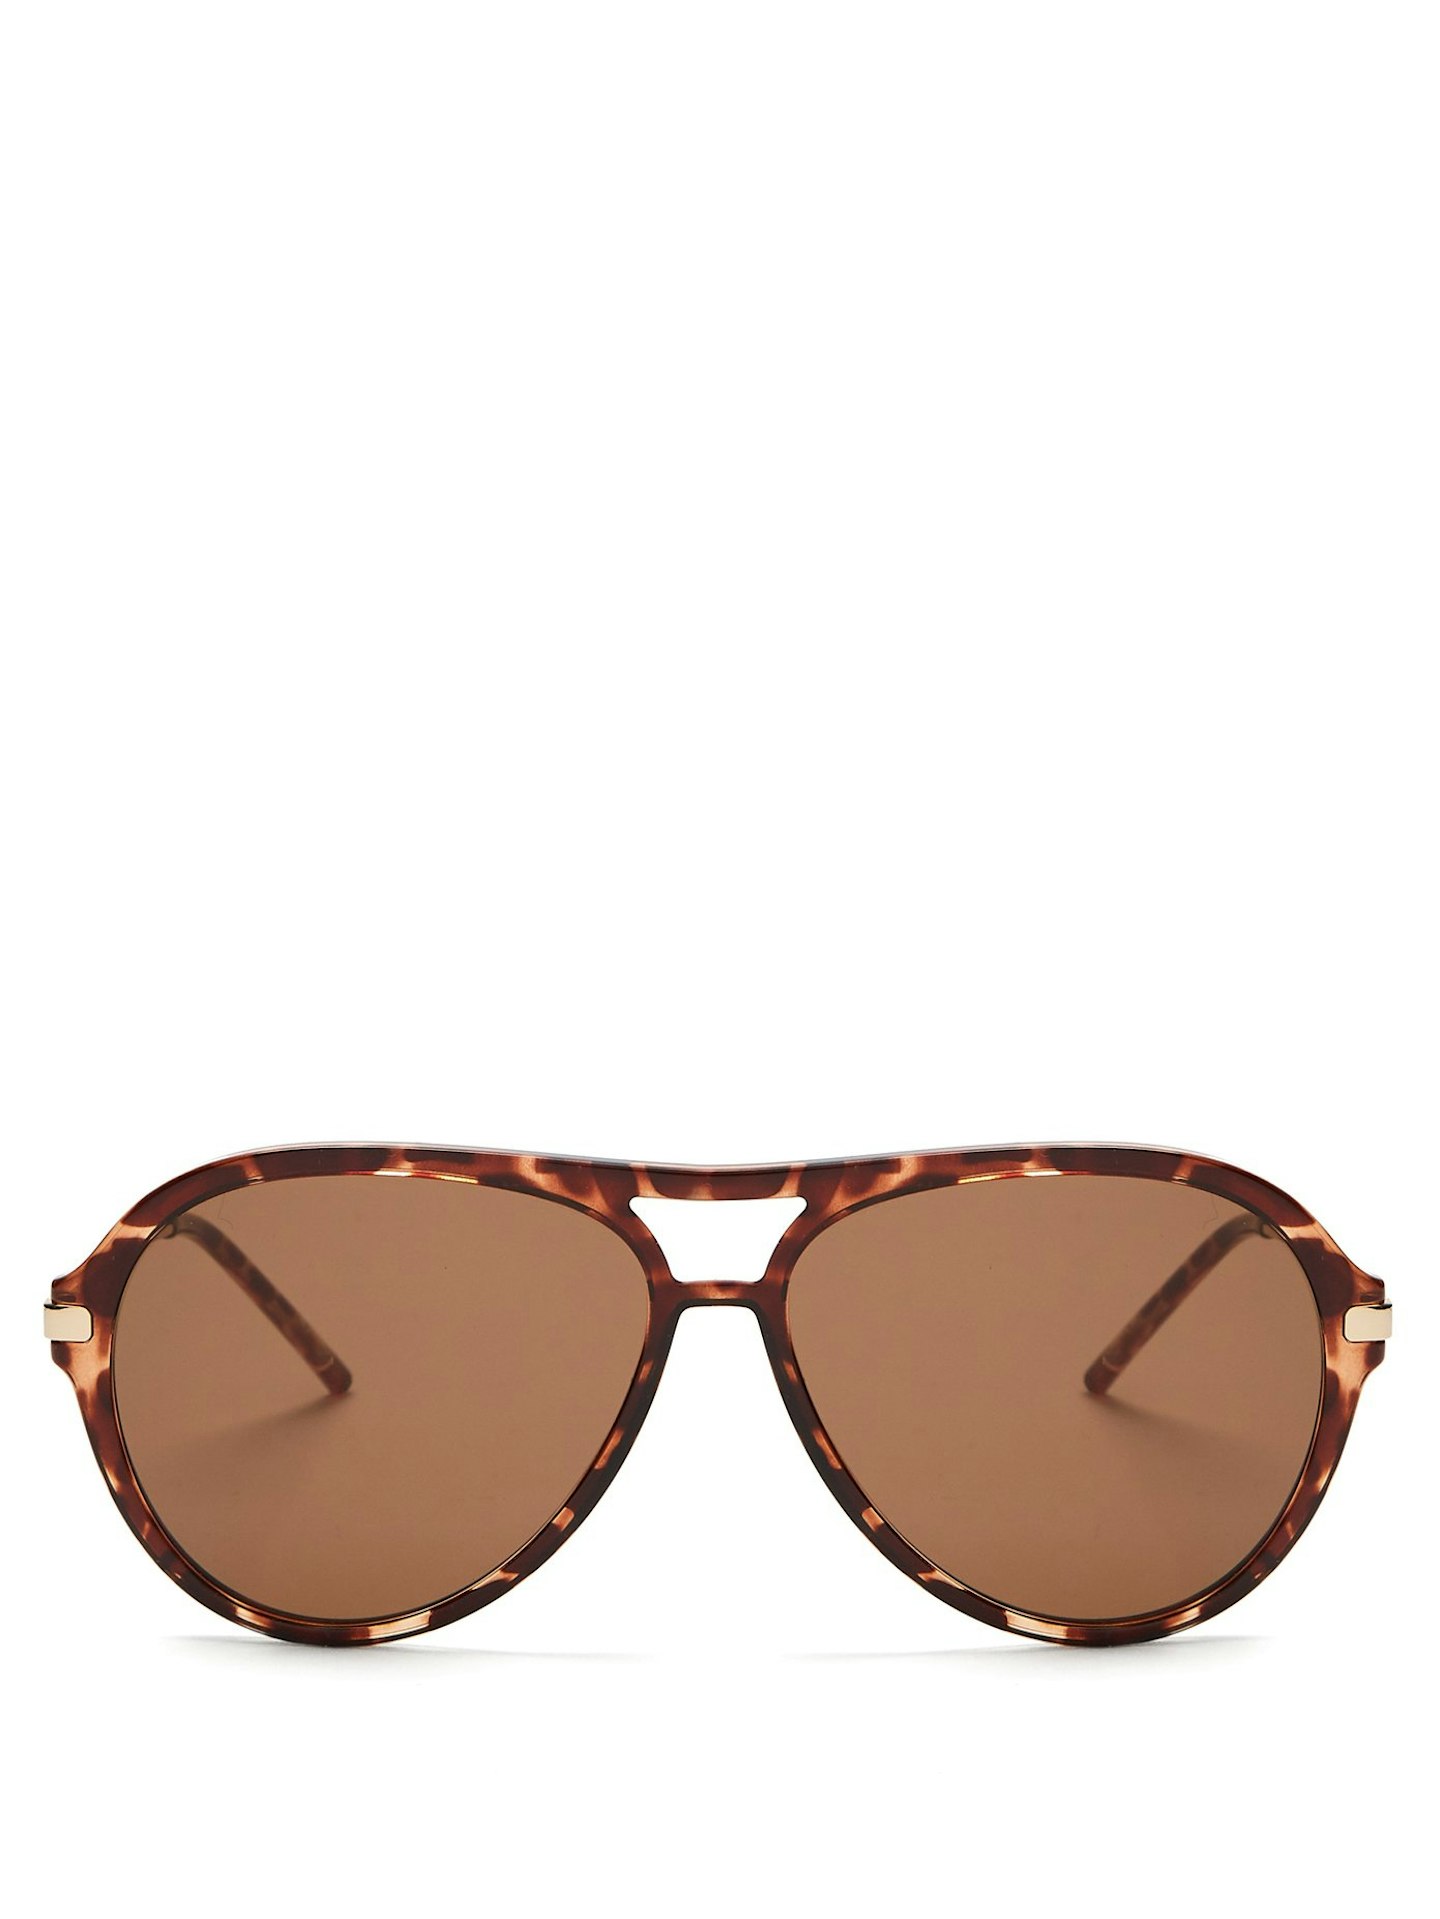 Meeyye, Symi Tortoiseshell Sunglasses, £68, Matchesfashion.com